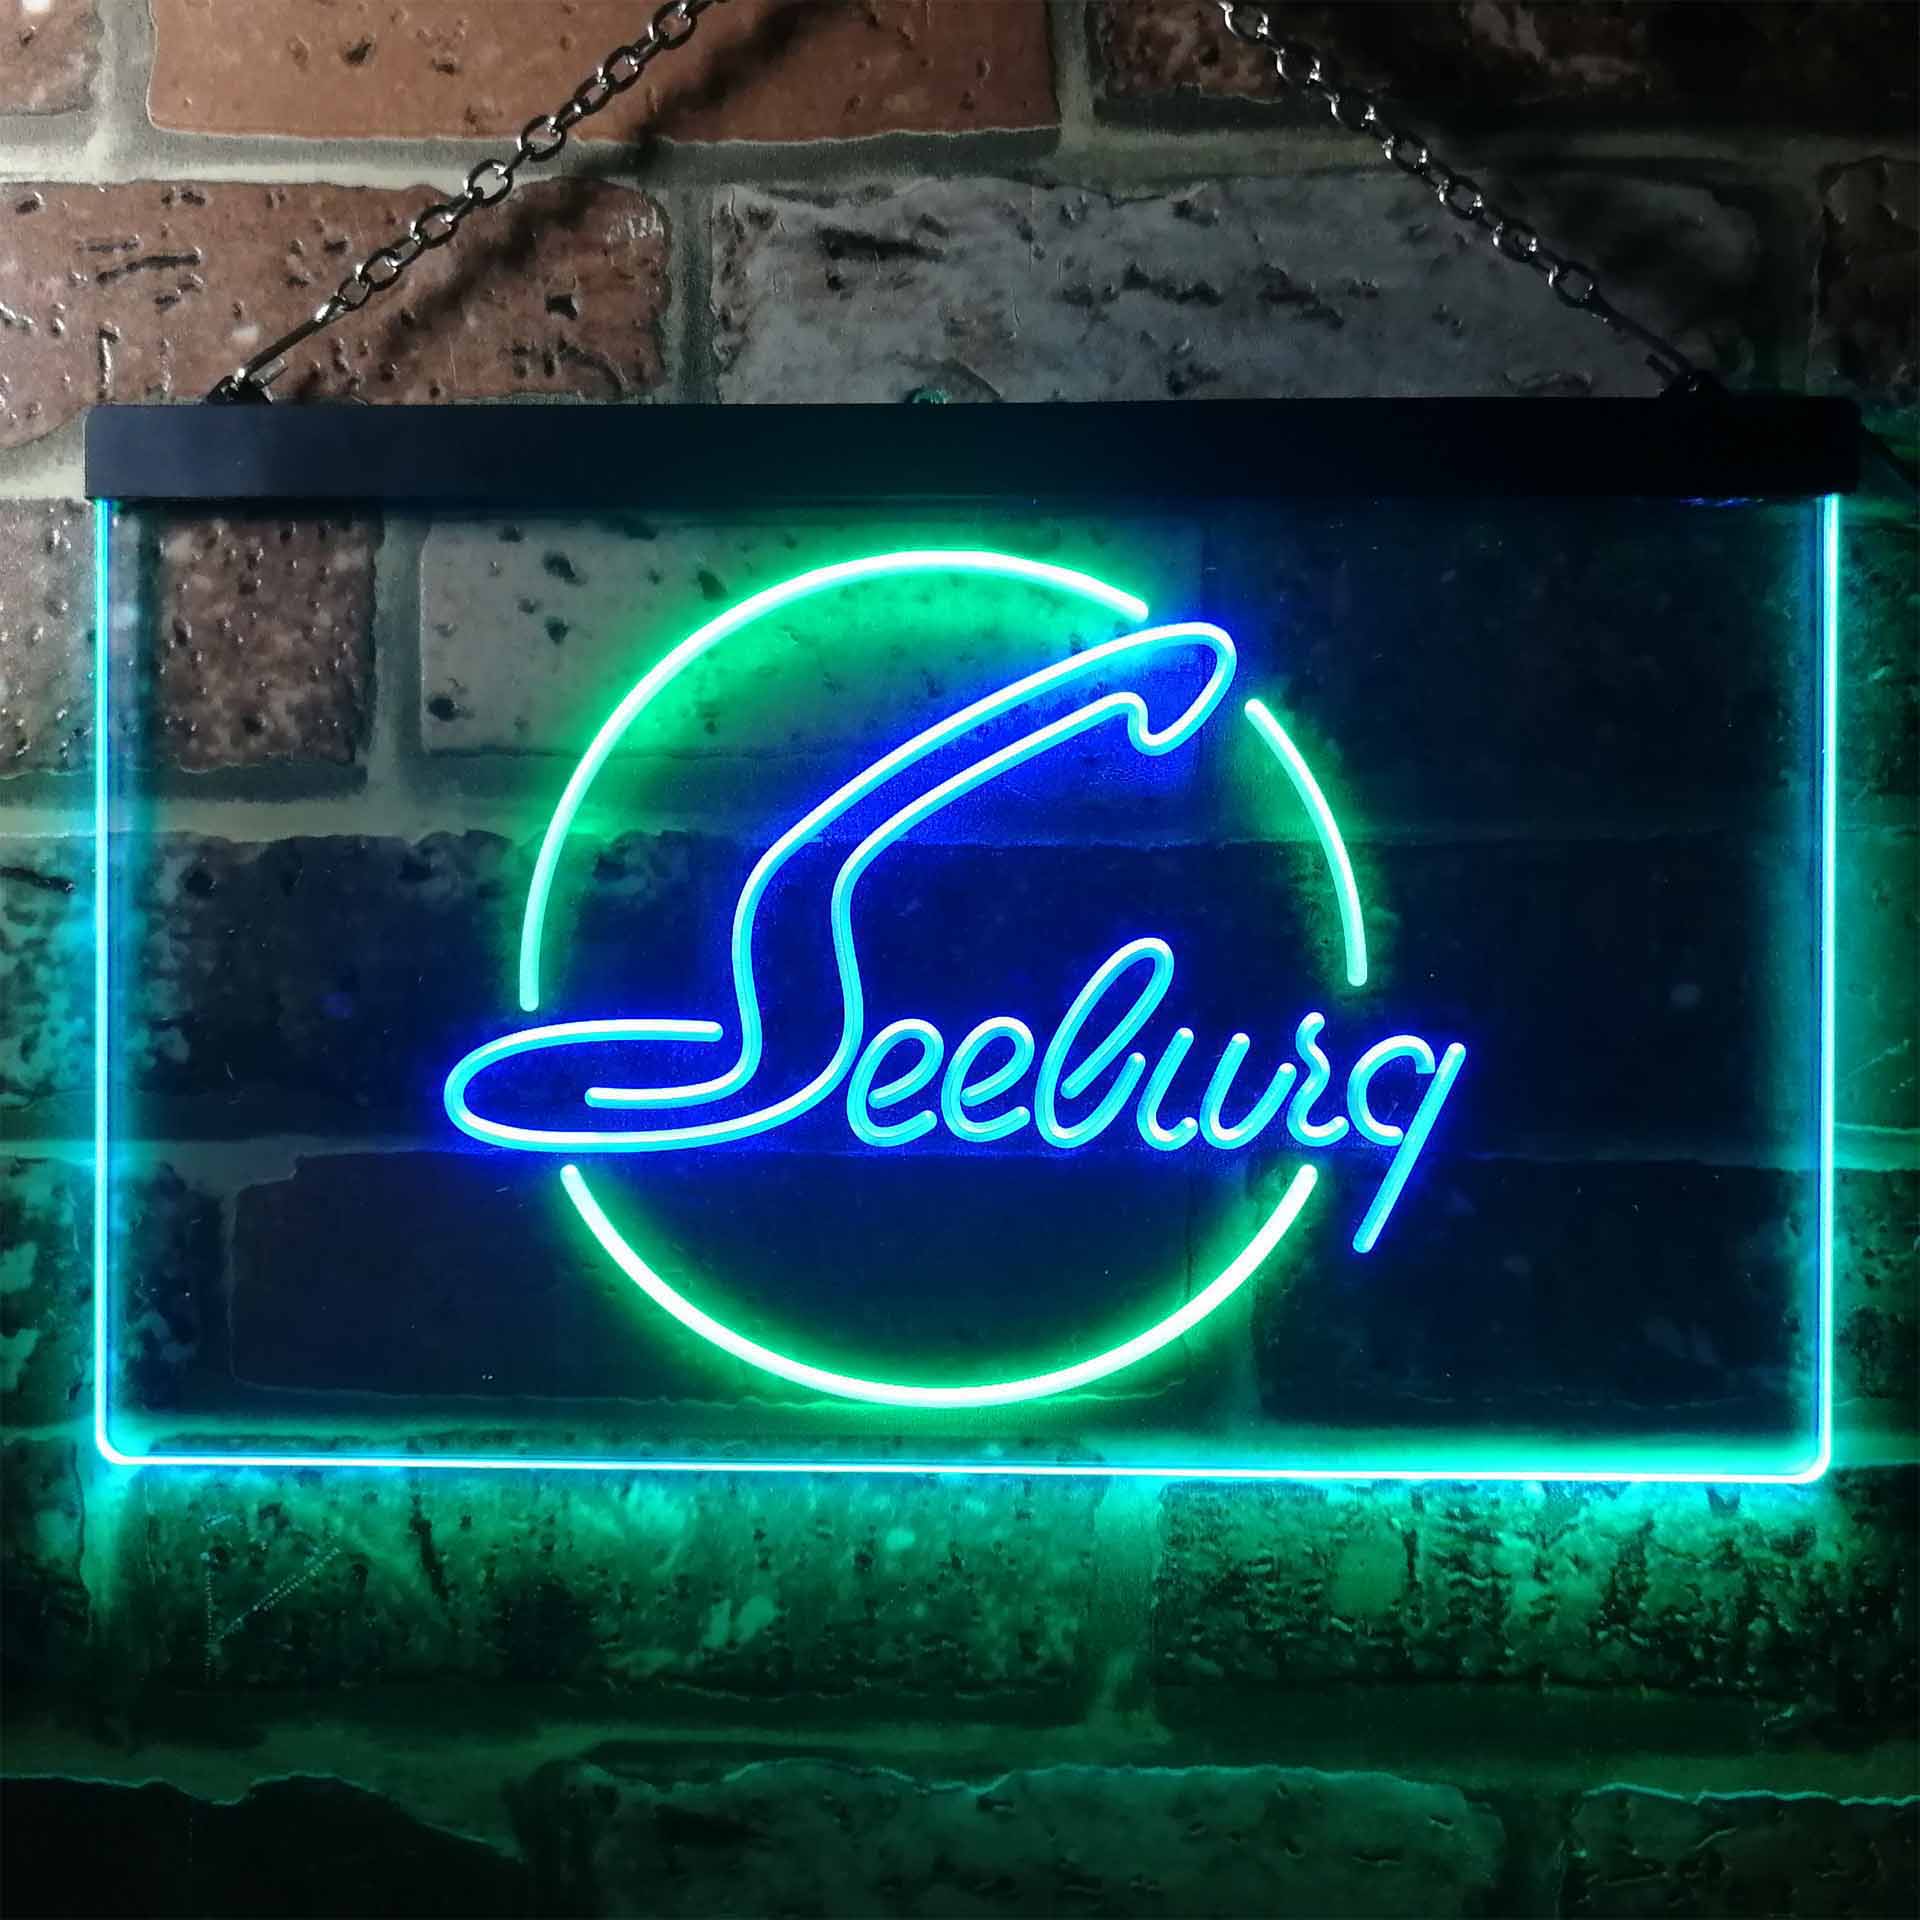 Seeburg Neon LED Sign